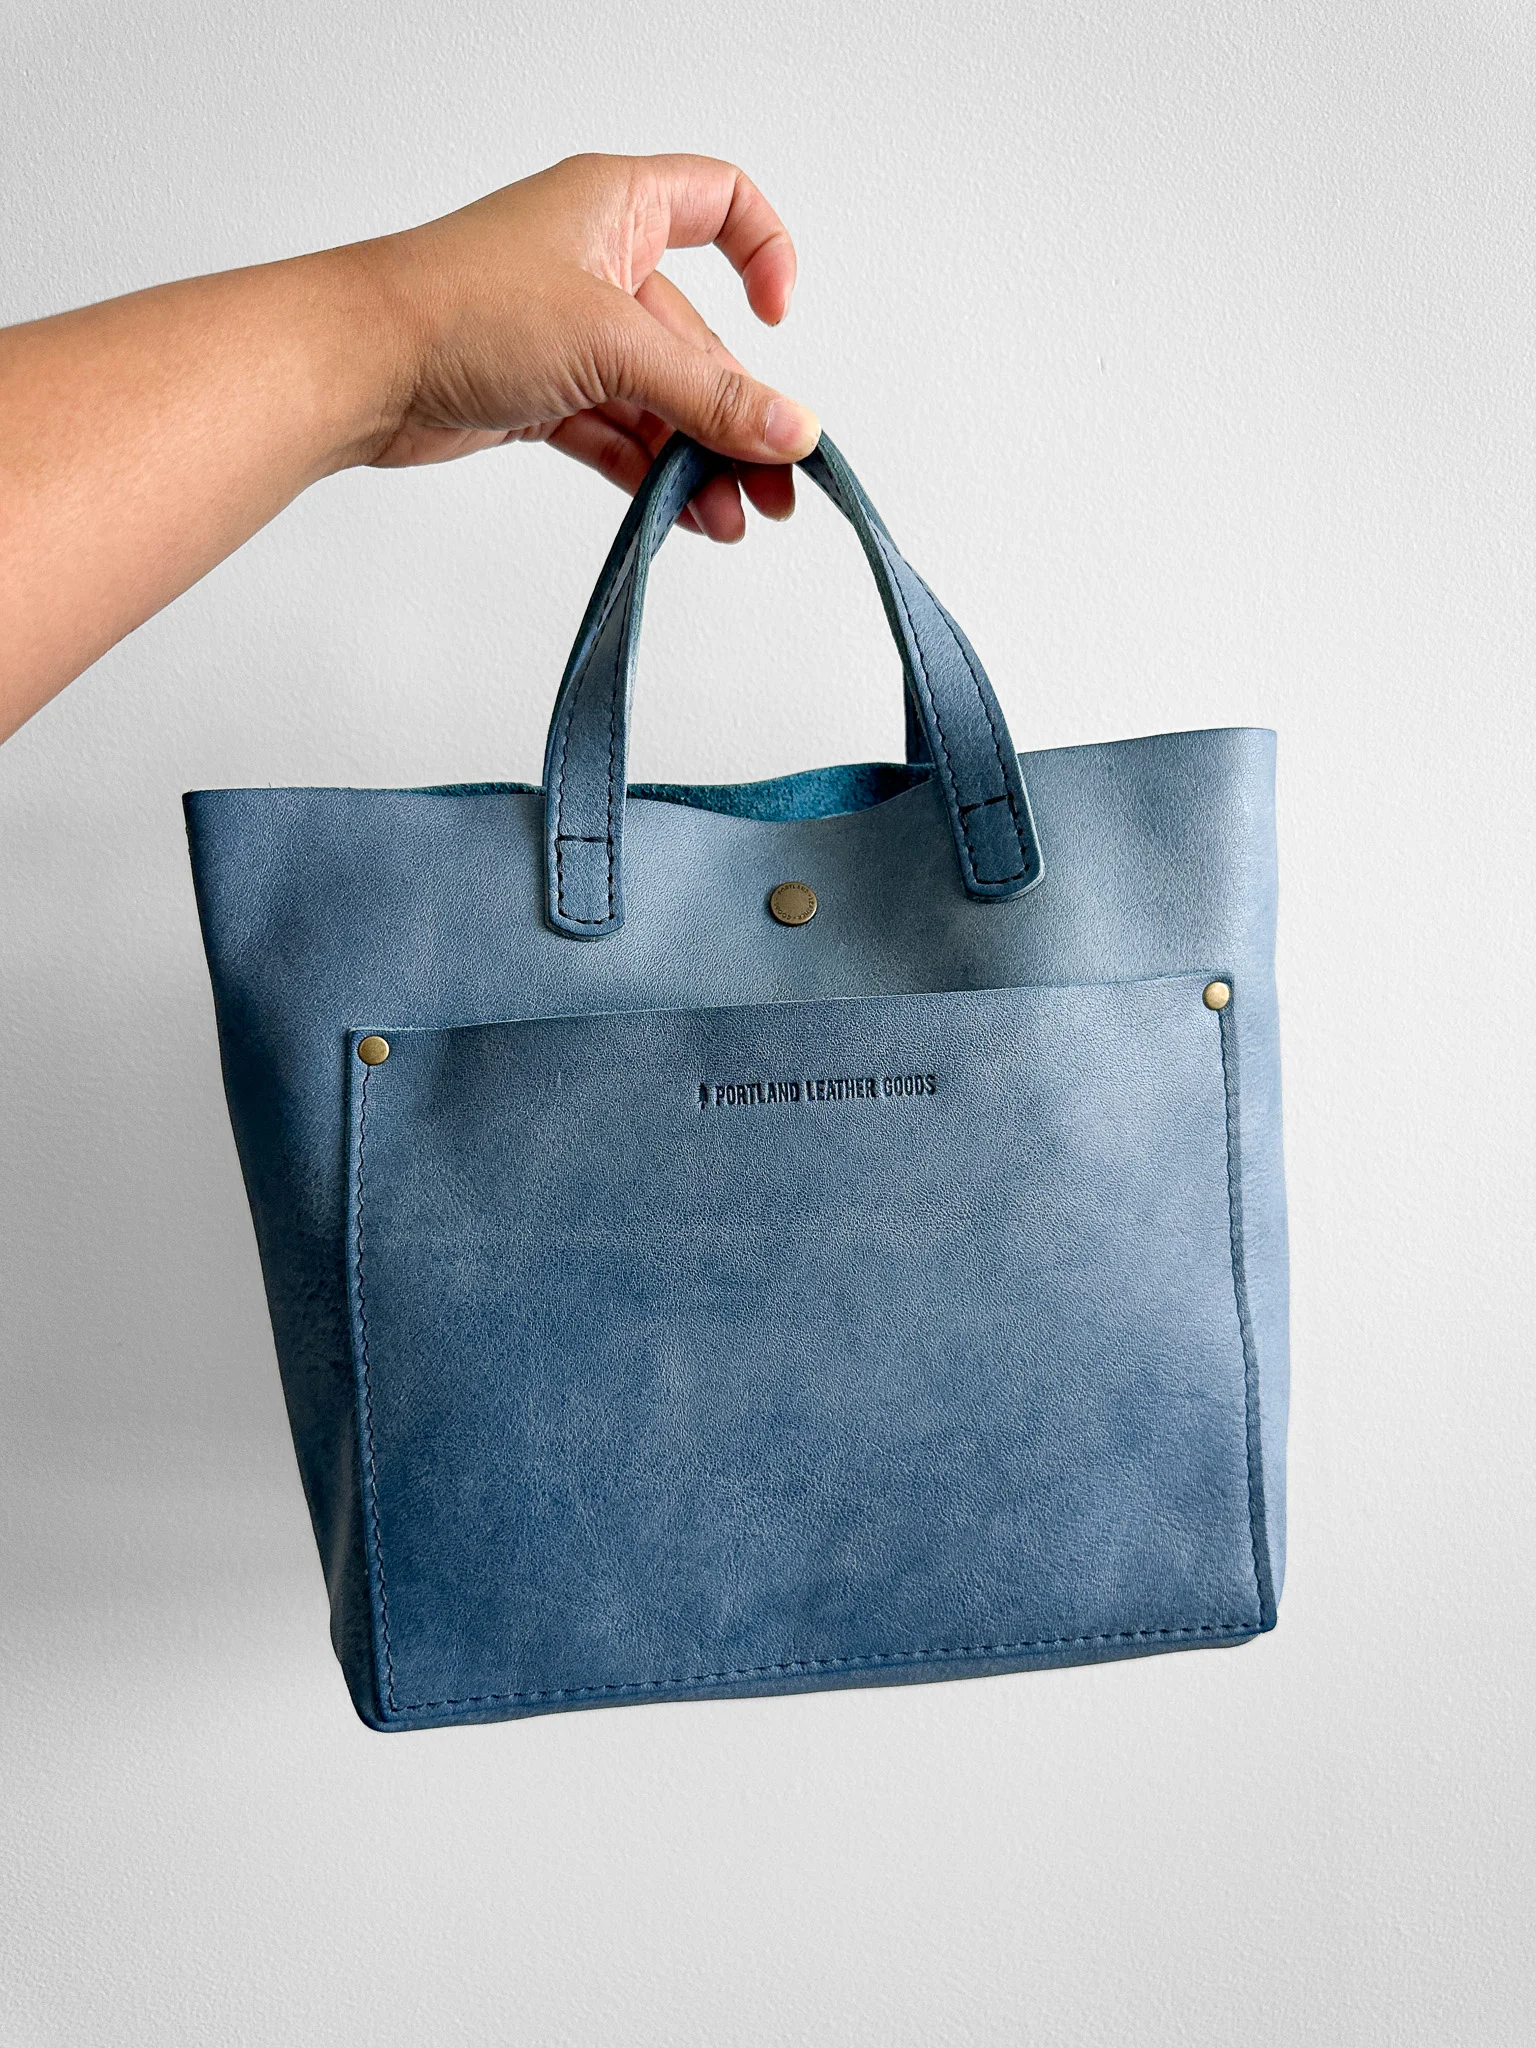 Portland Leather Goods Mini Tote Pastel Blue crossbody bag Mystery Box